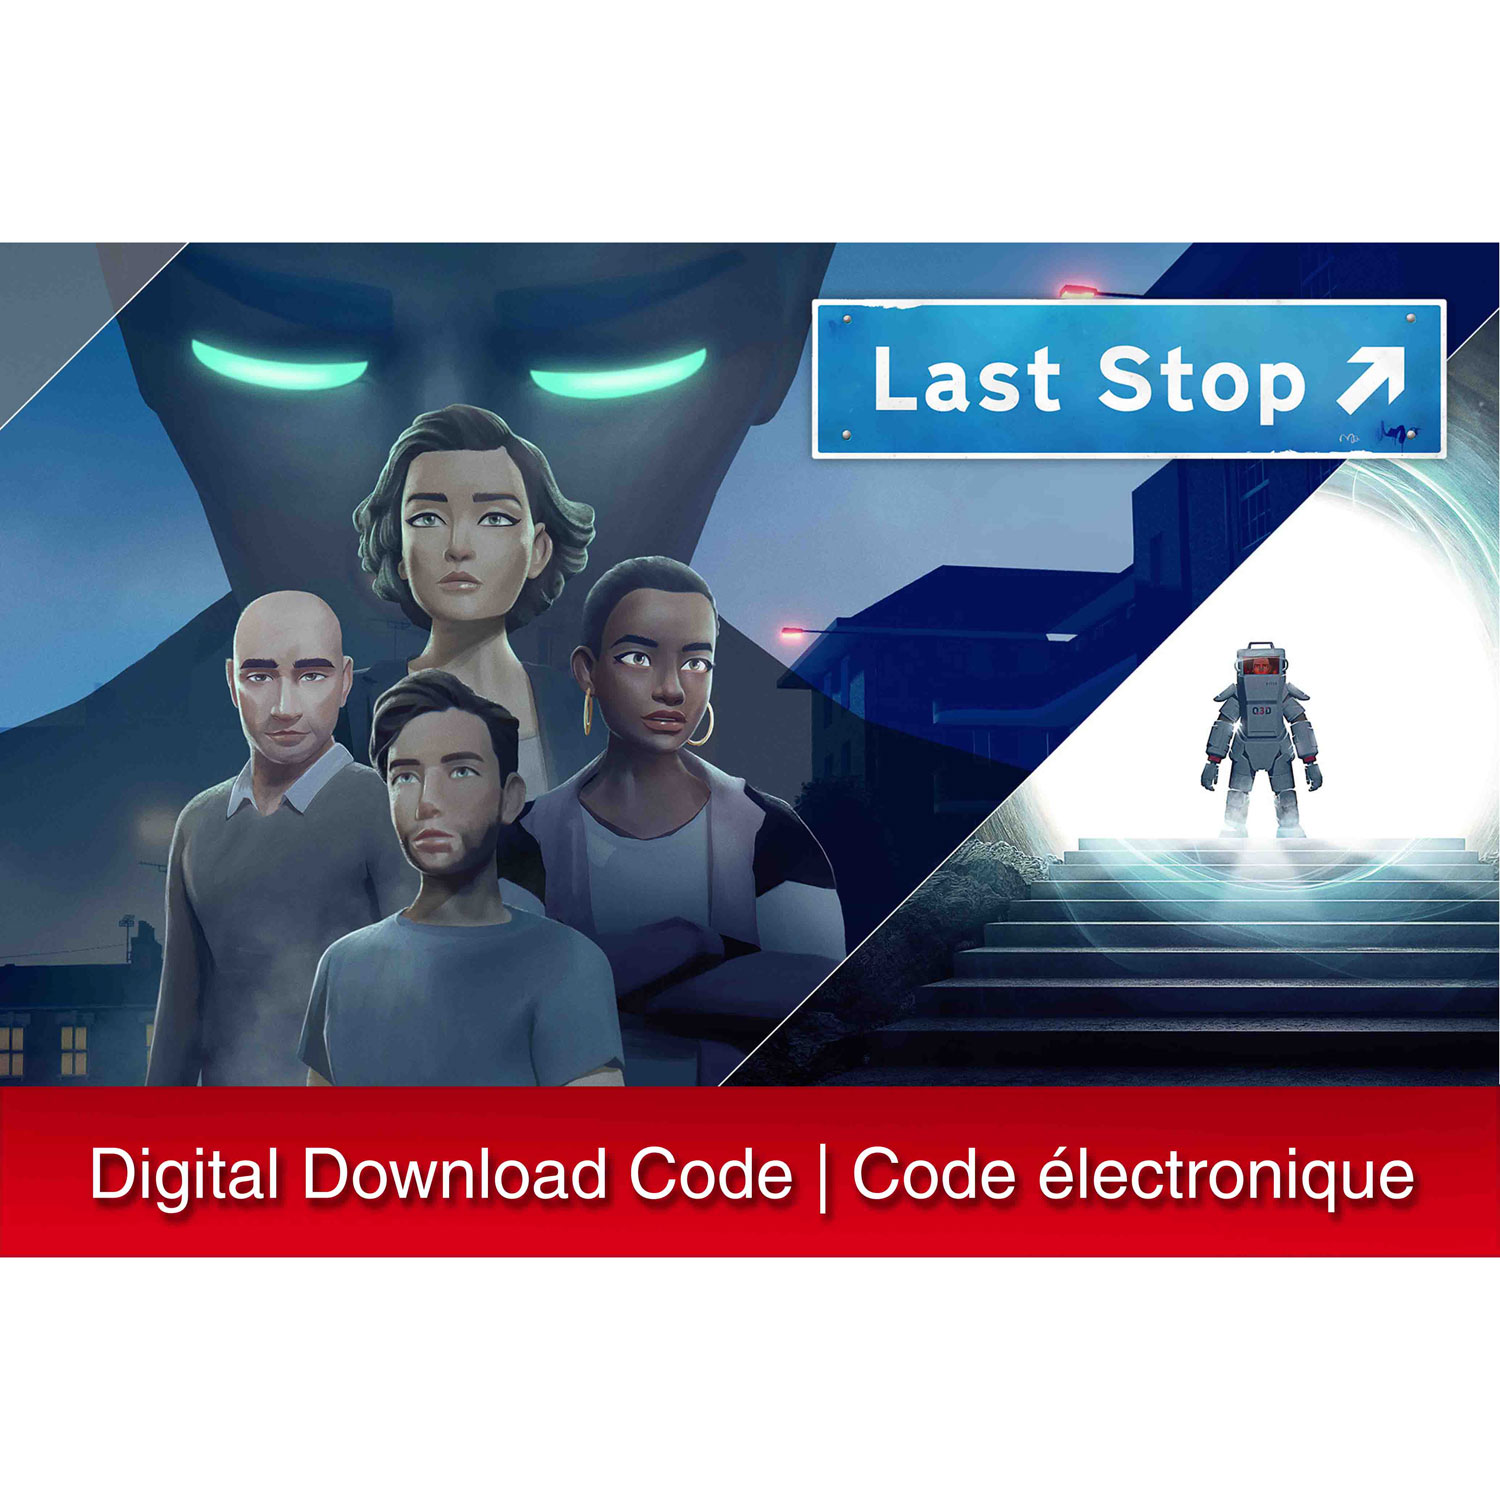 Last Stop (Switch) - Digital Download